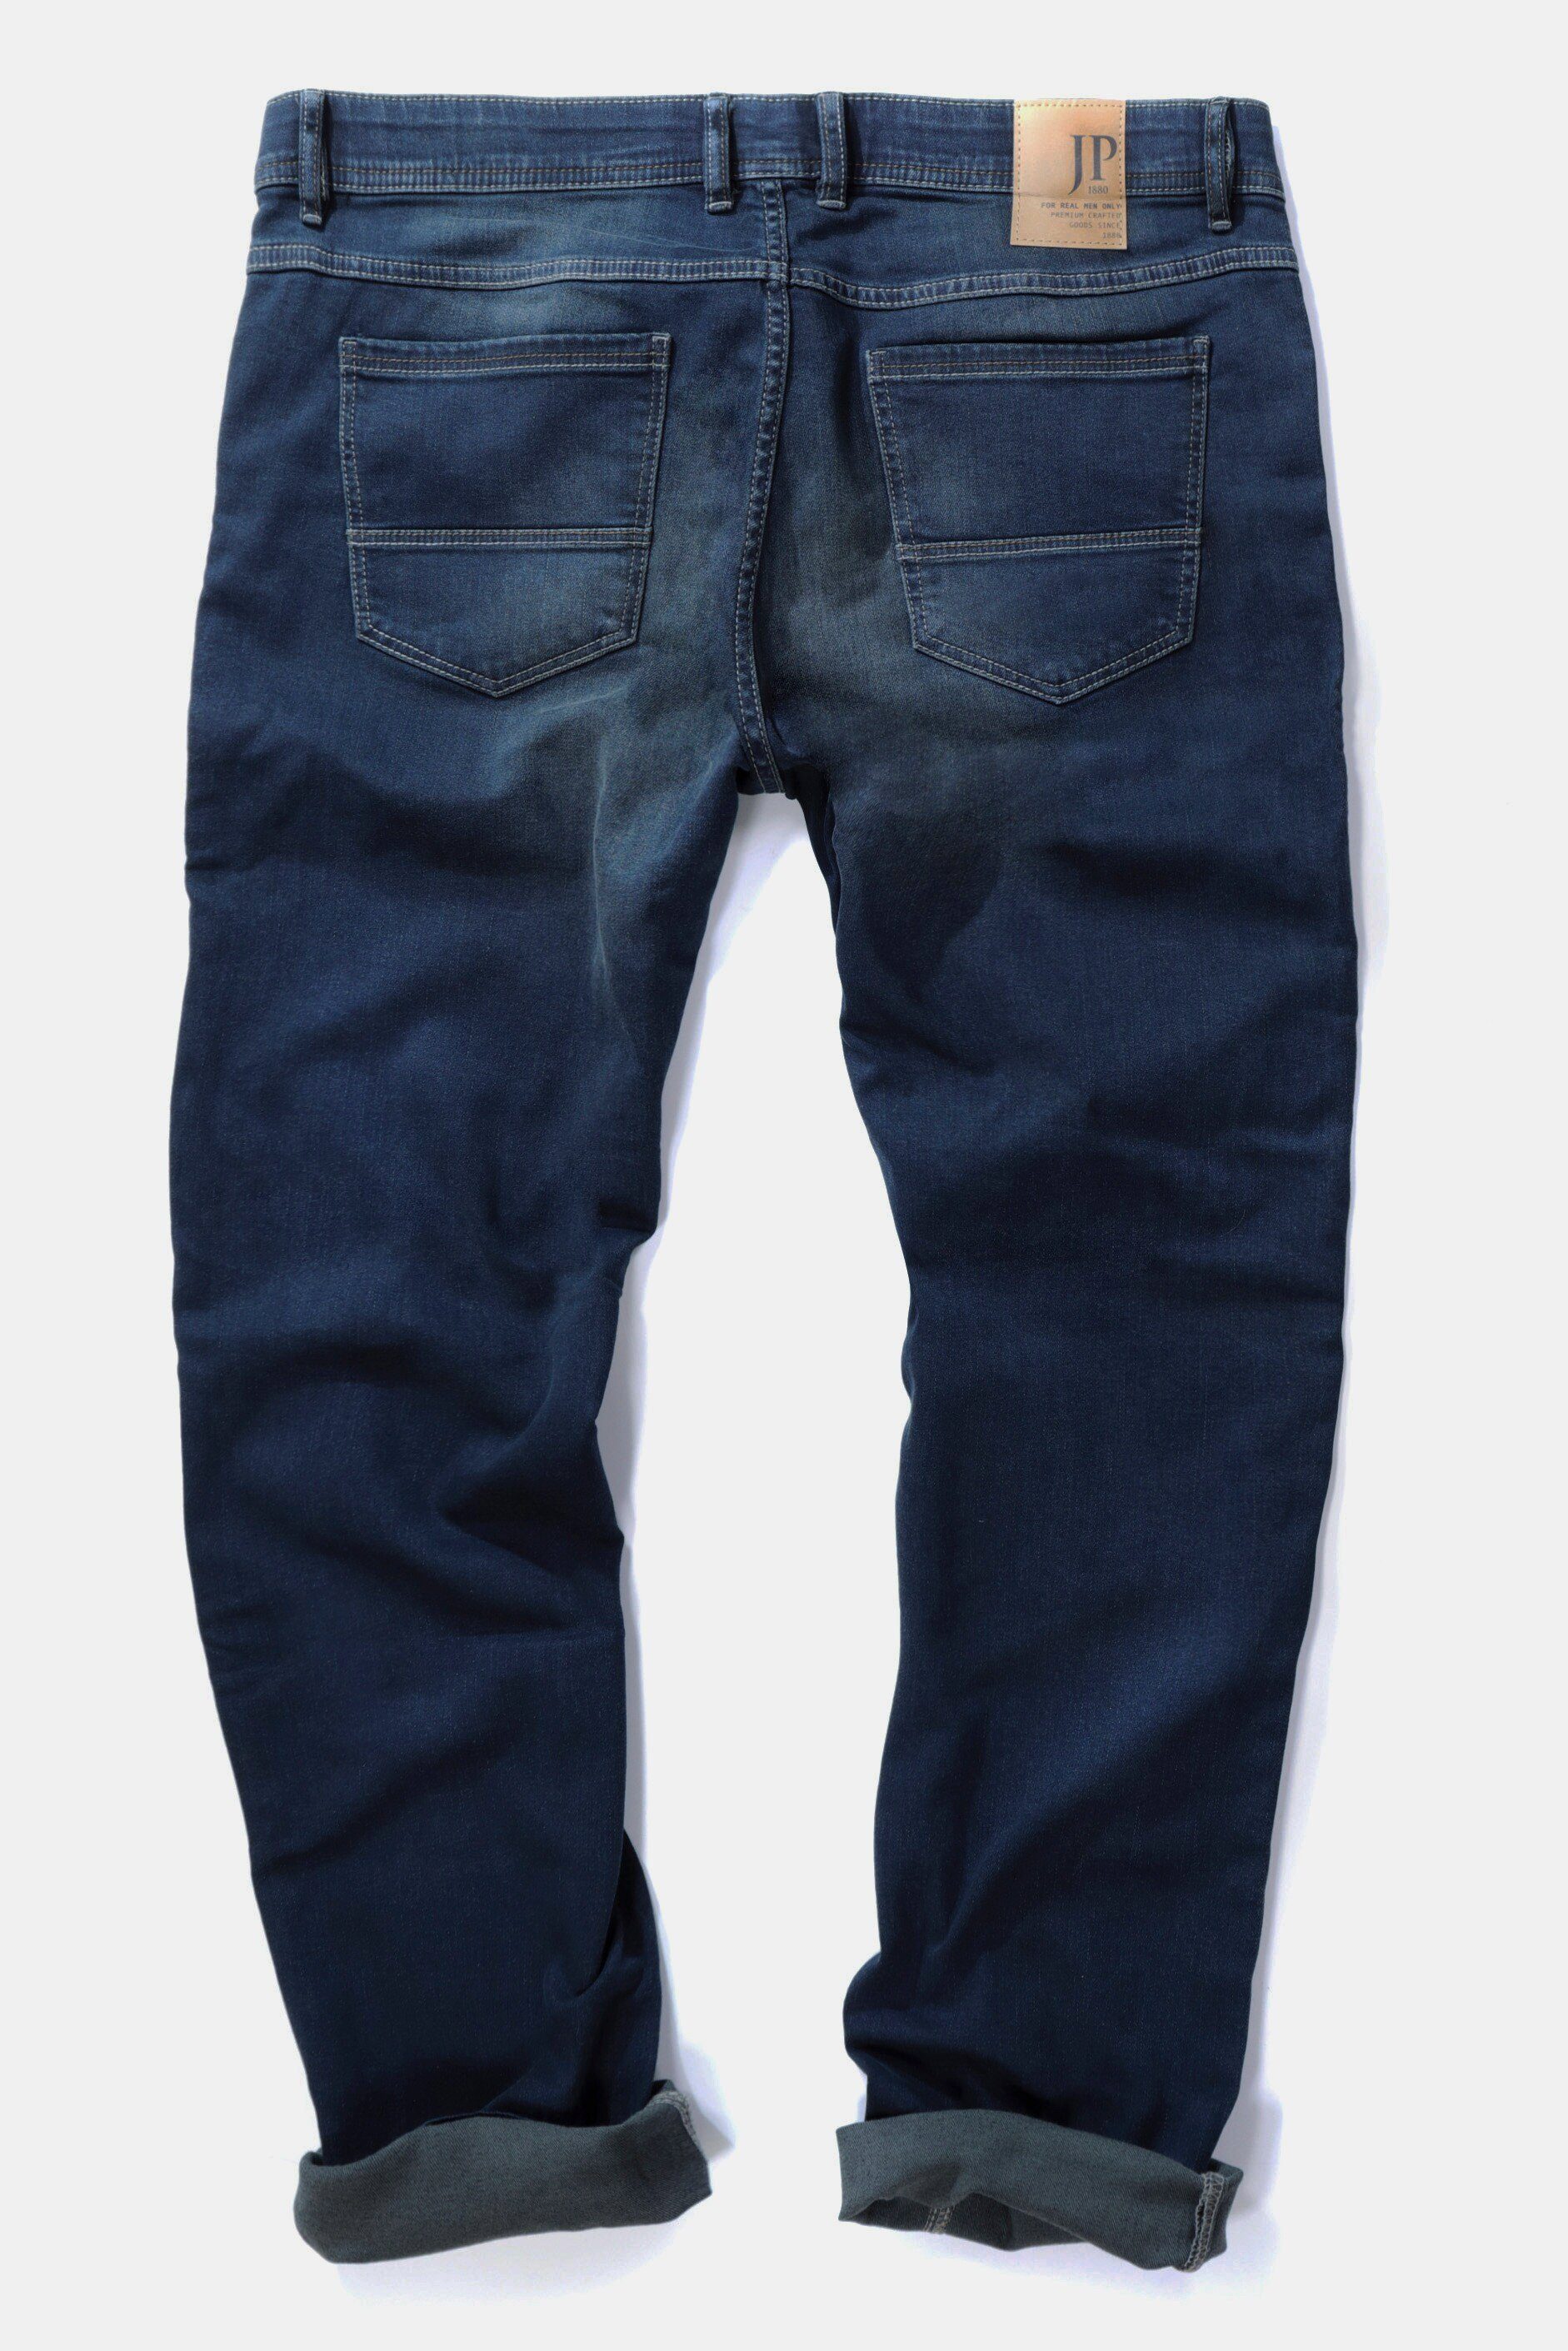 JP1880 Cargohose Jeans Bauchfit 70/35 bis denim blue Gr. Denim